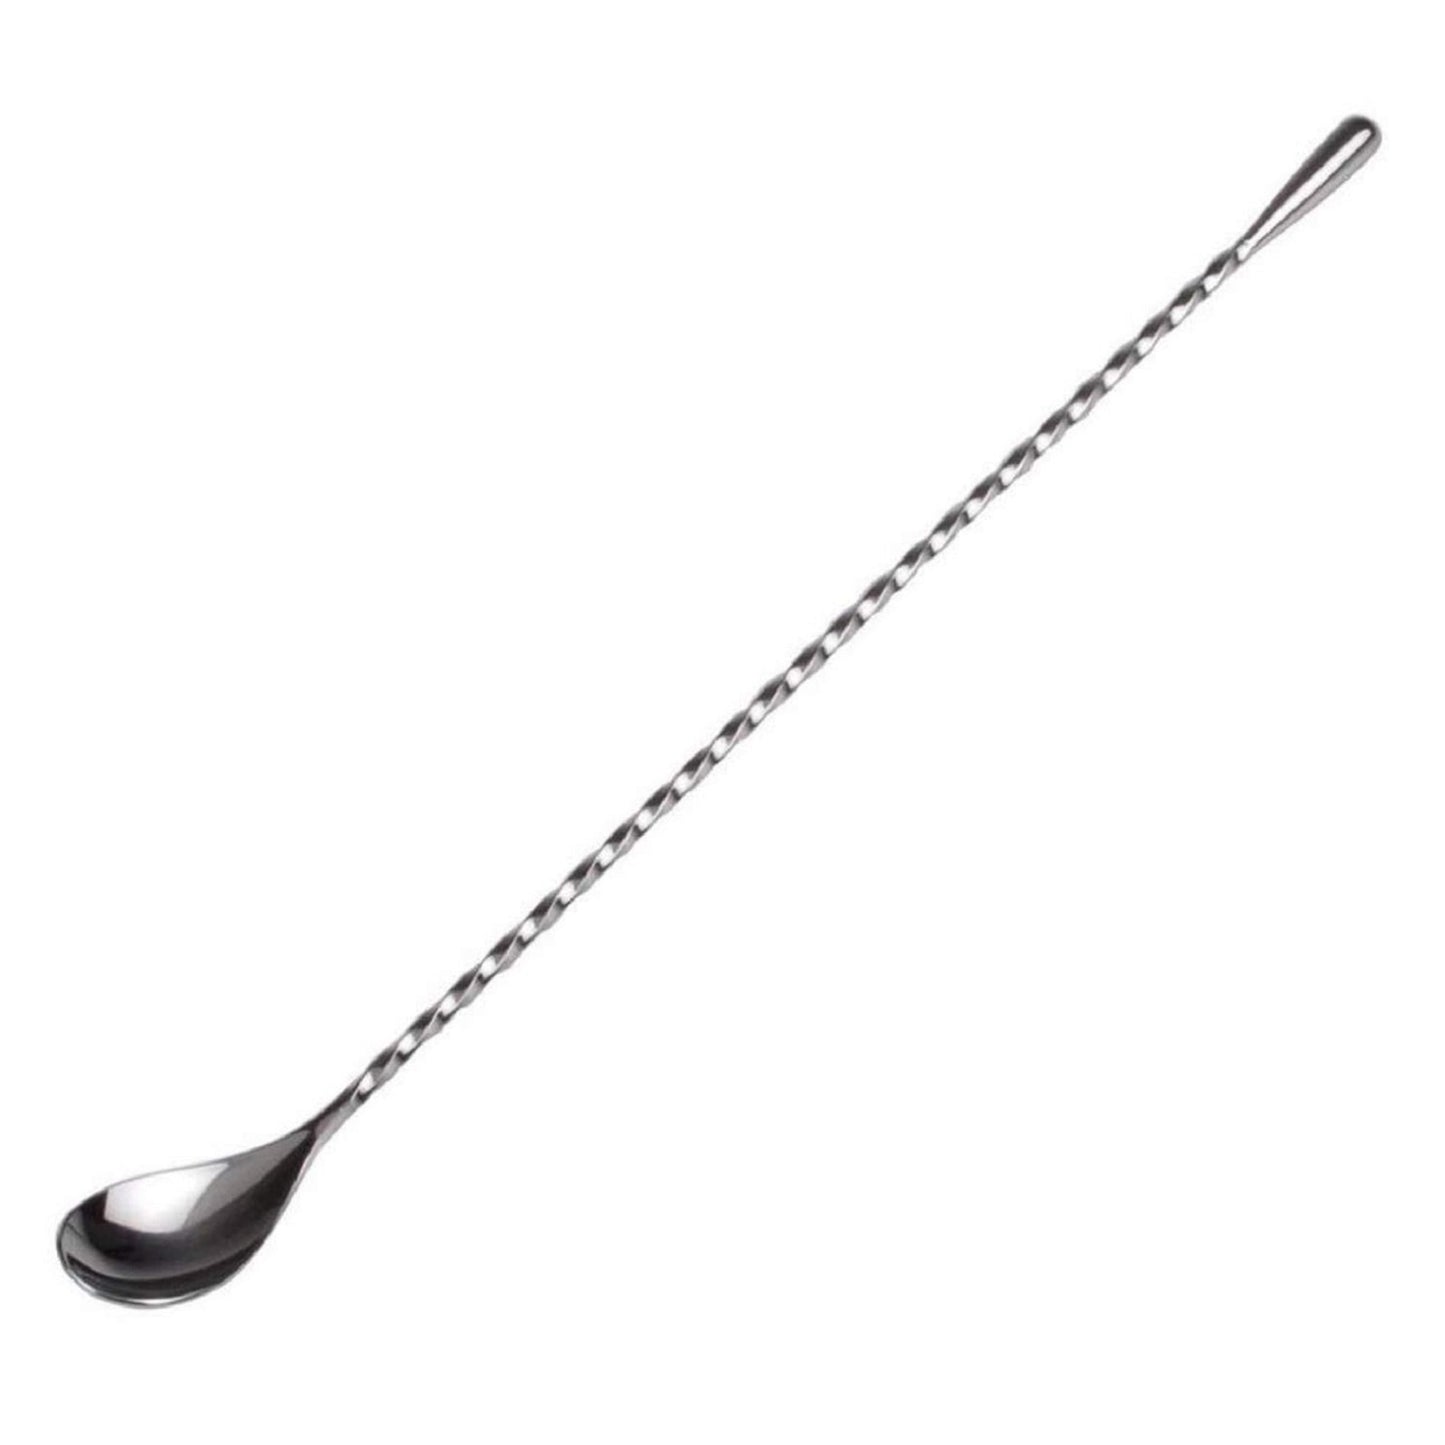 Rudra Exports Teardrop Bar Spoon, Extra Long Bar Stirrer 40 cm,Japanese Style Teardrop End Design - 1 Pc.